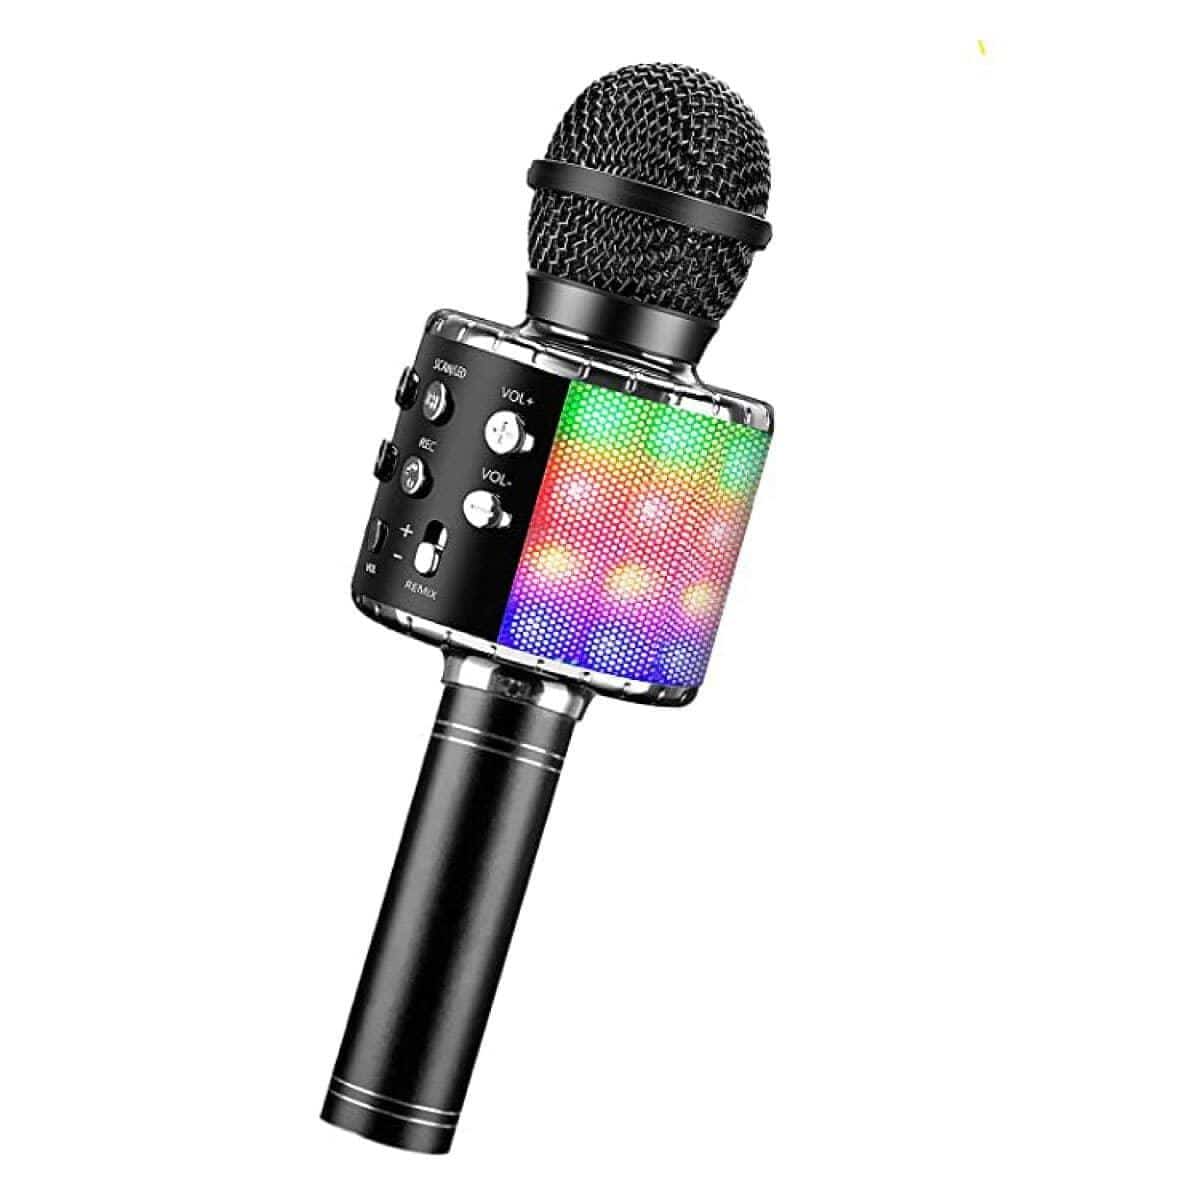 Microphone sans Fil Karaoké, Ankuka Micro Karaoke Enfant avec